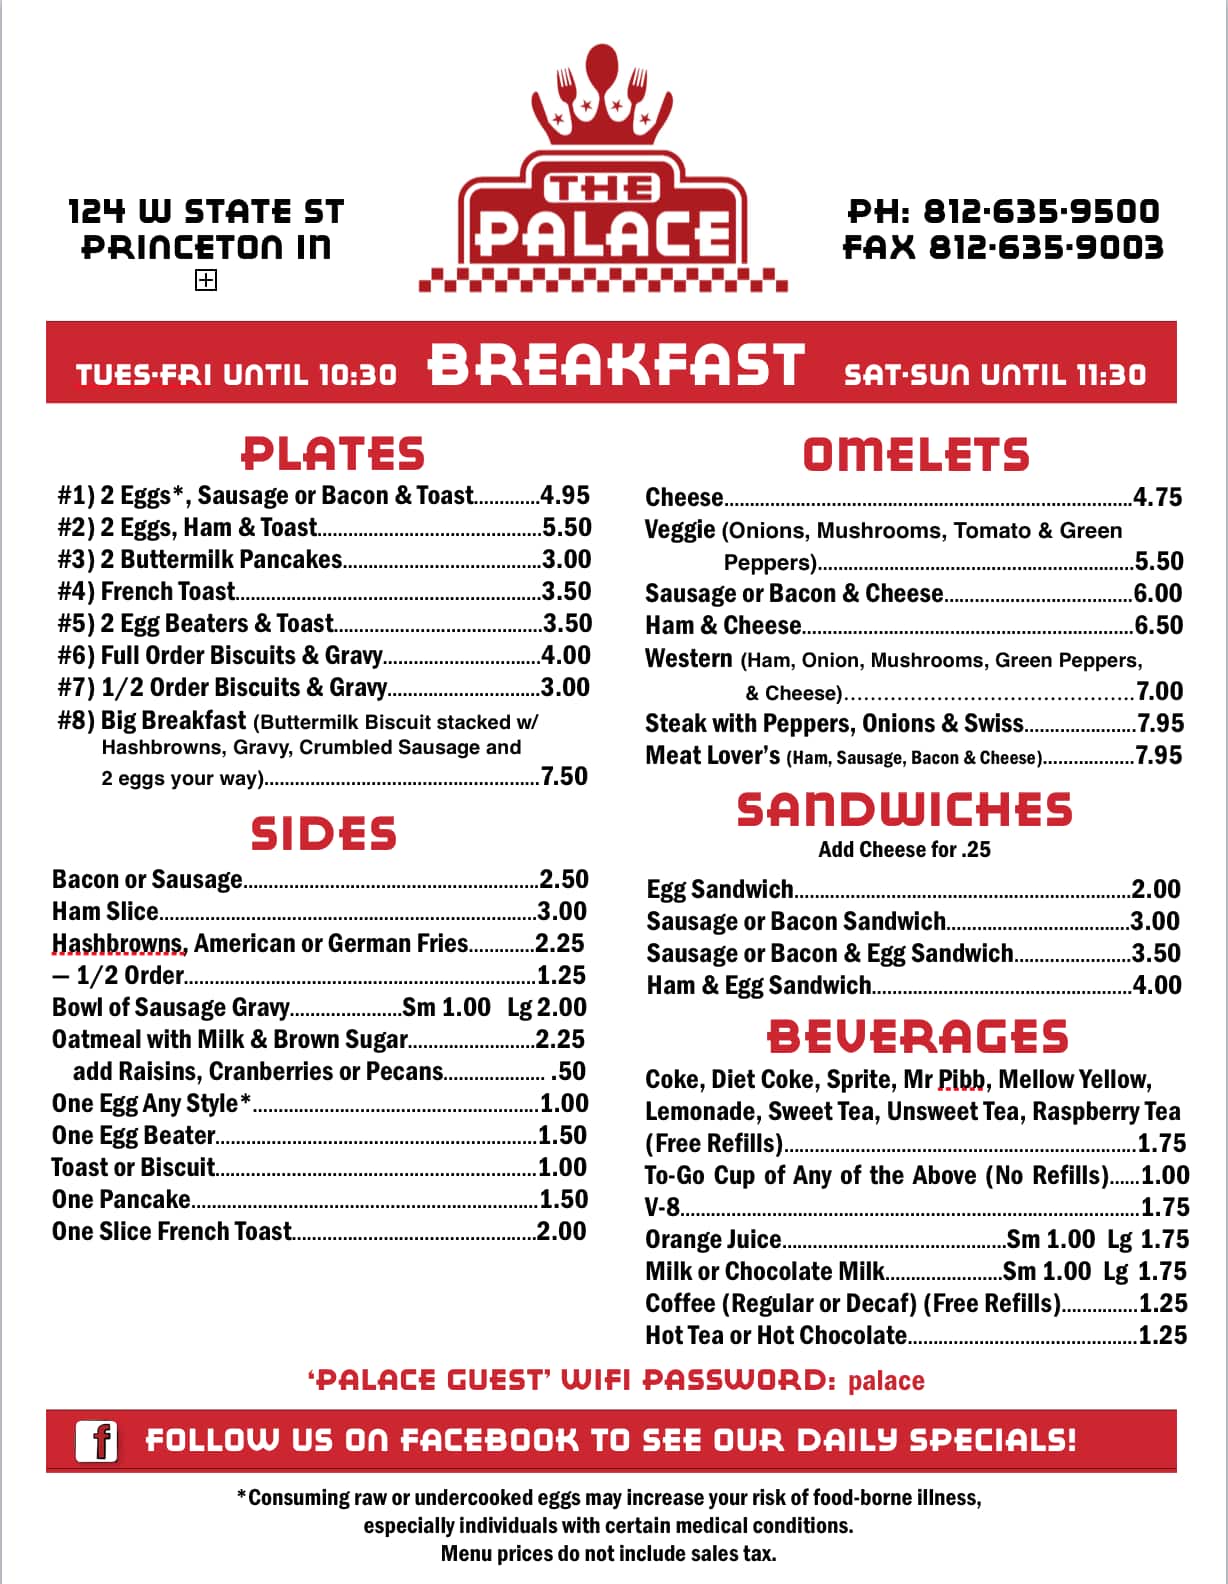 Menu at Palace Cafe, Princeton